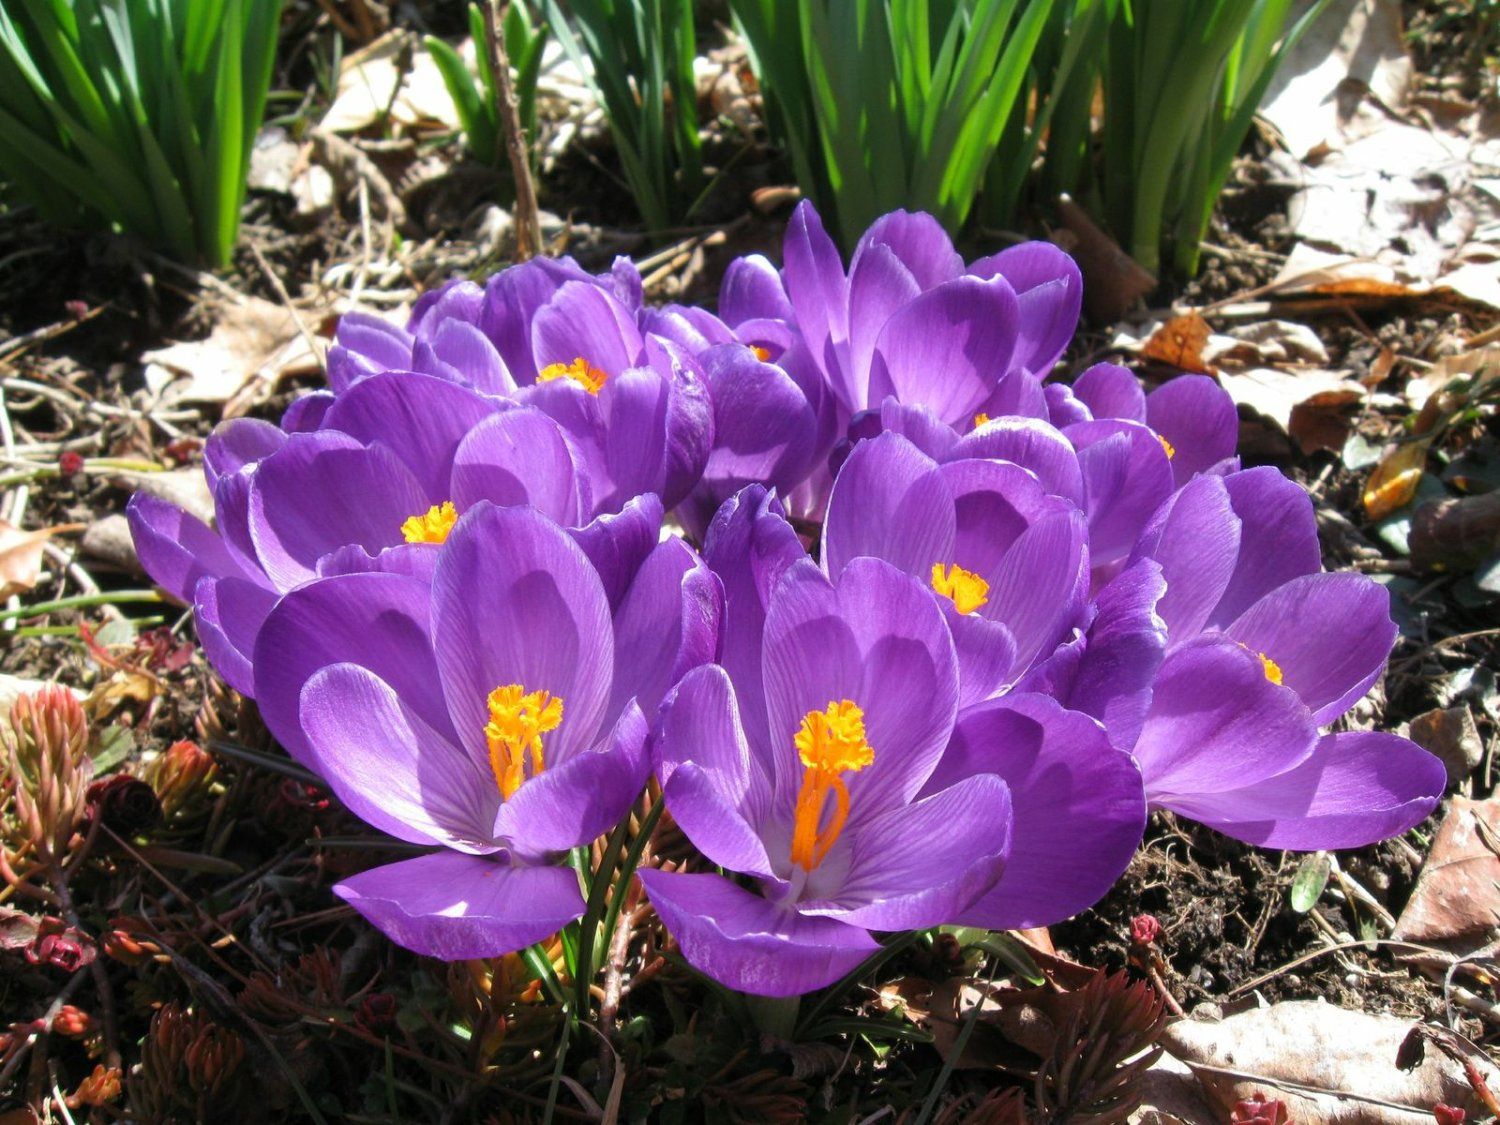 Previous Happening: Spring in Bloom